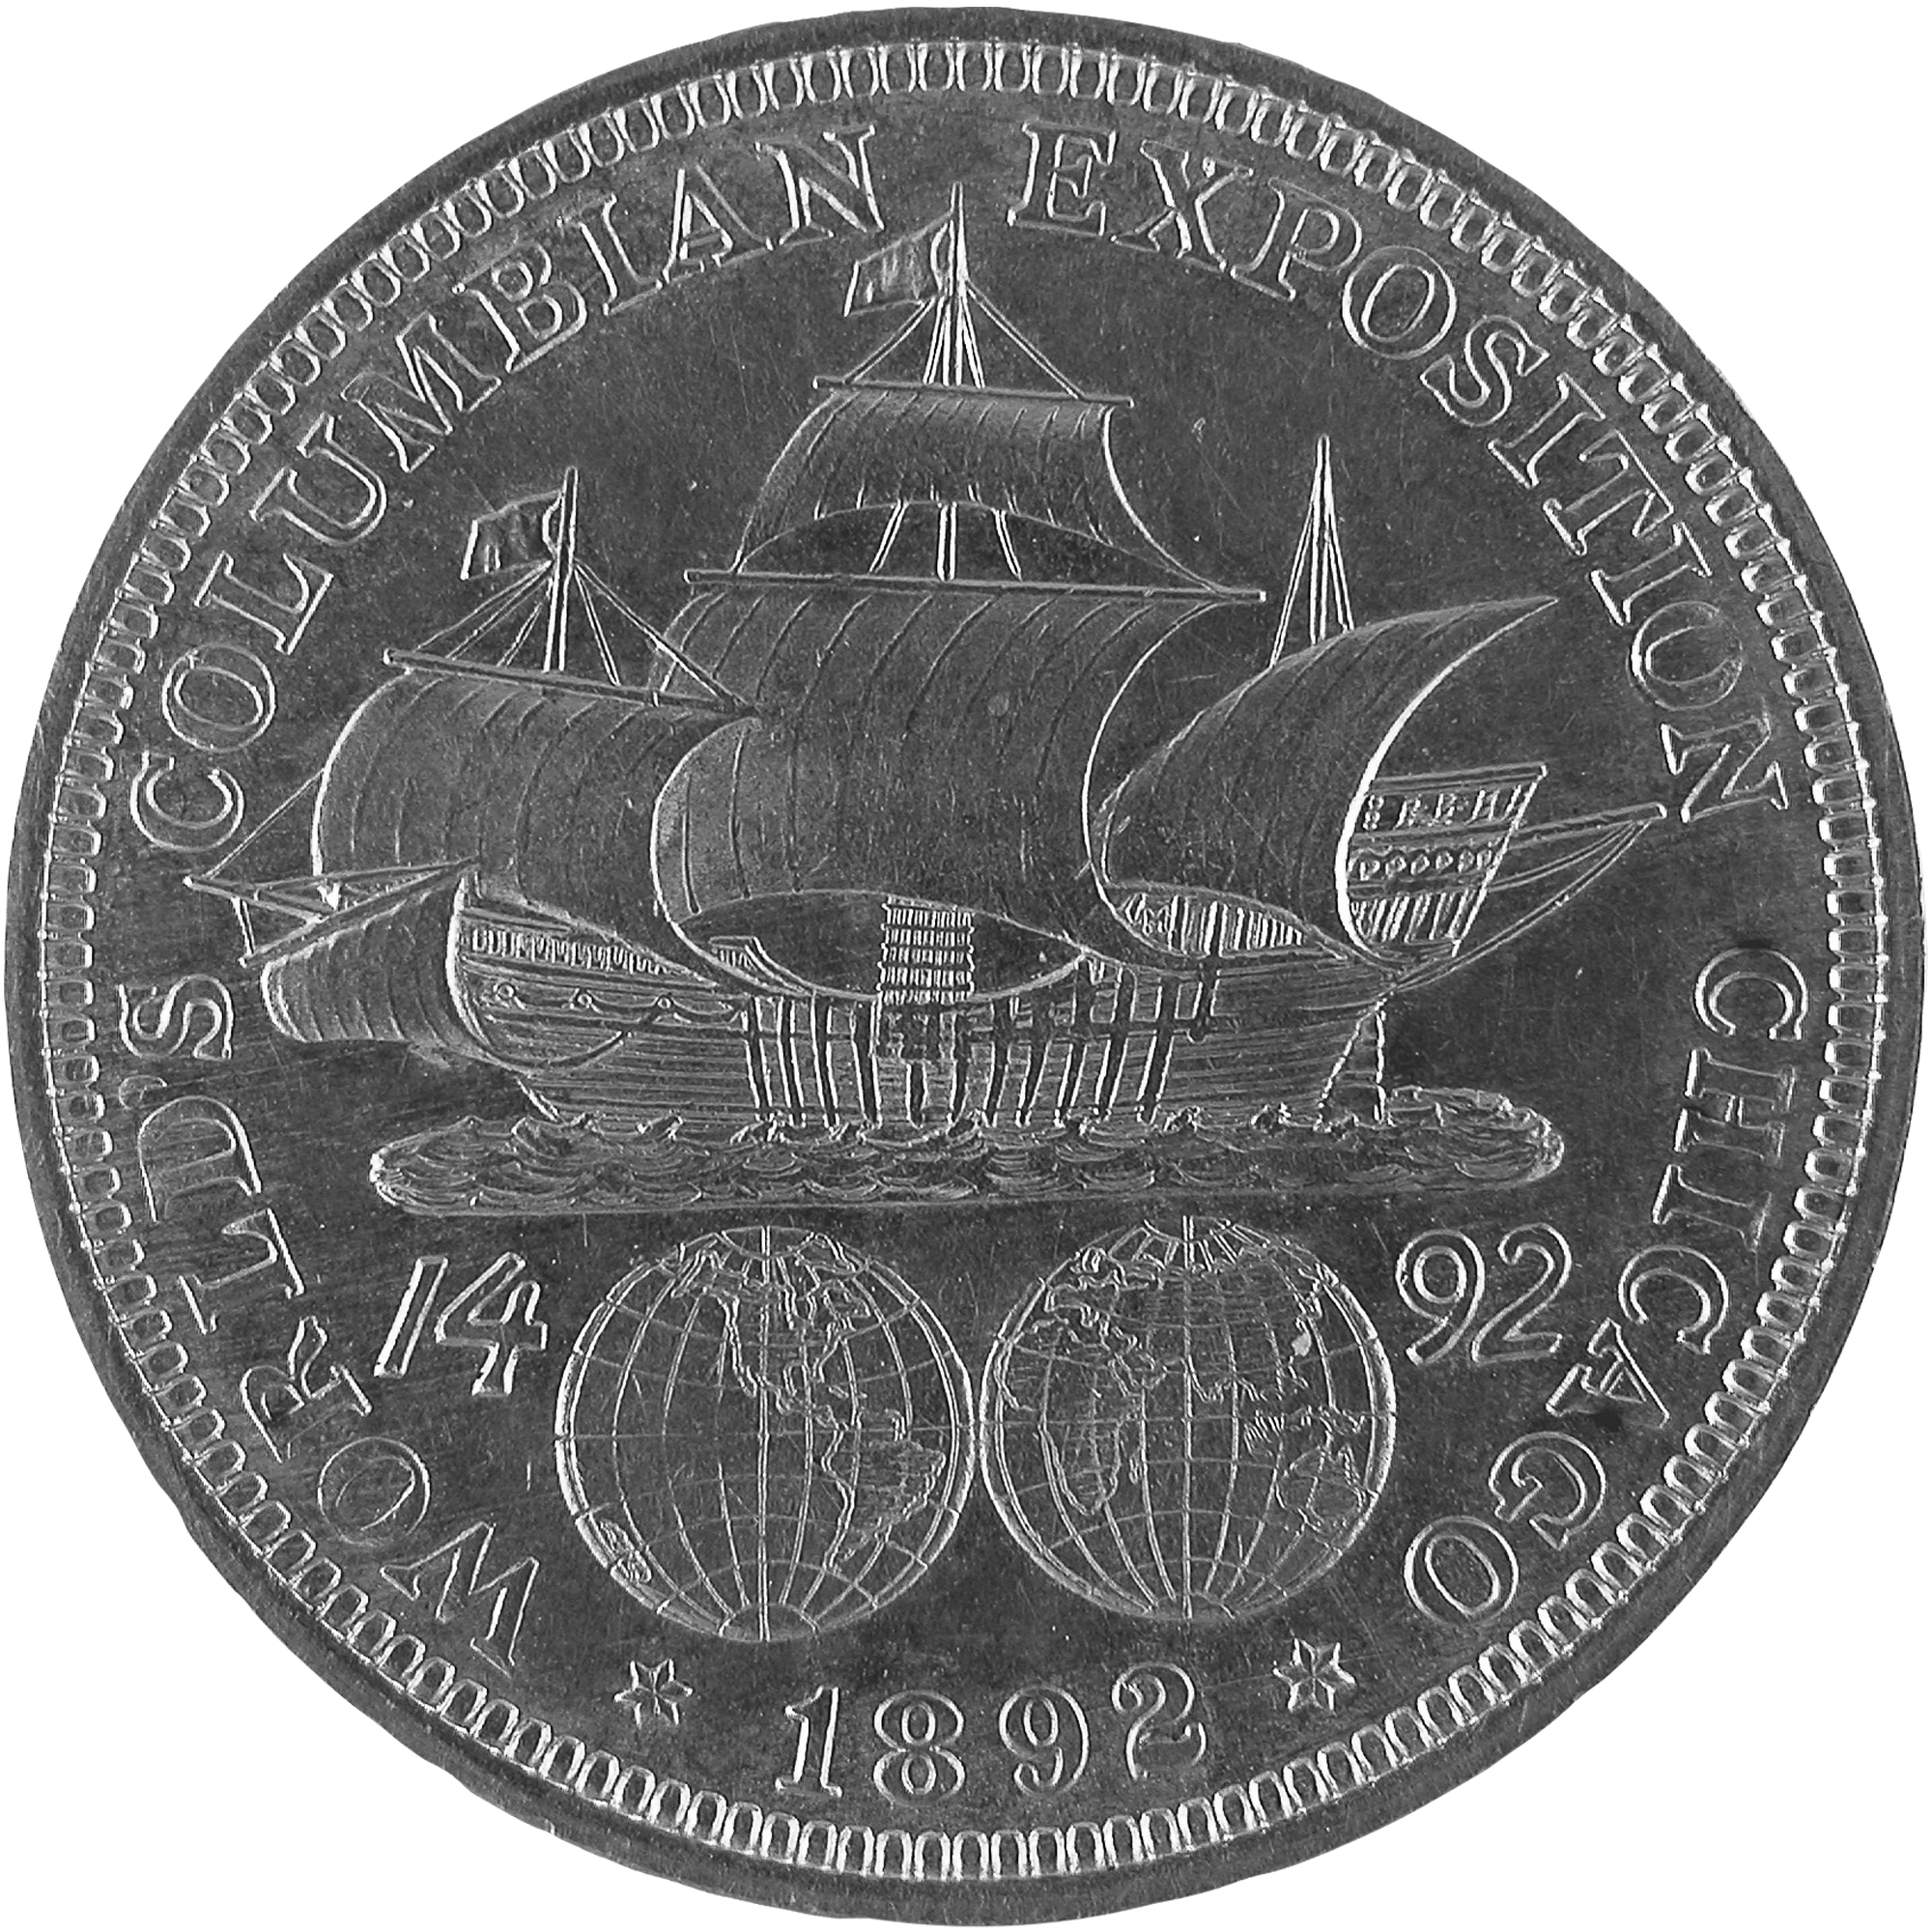 1892 Columbian Exposition Commemorative Silver Half Dollar Coin Reverse